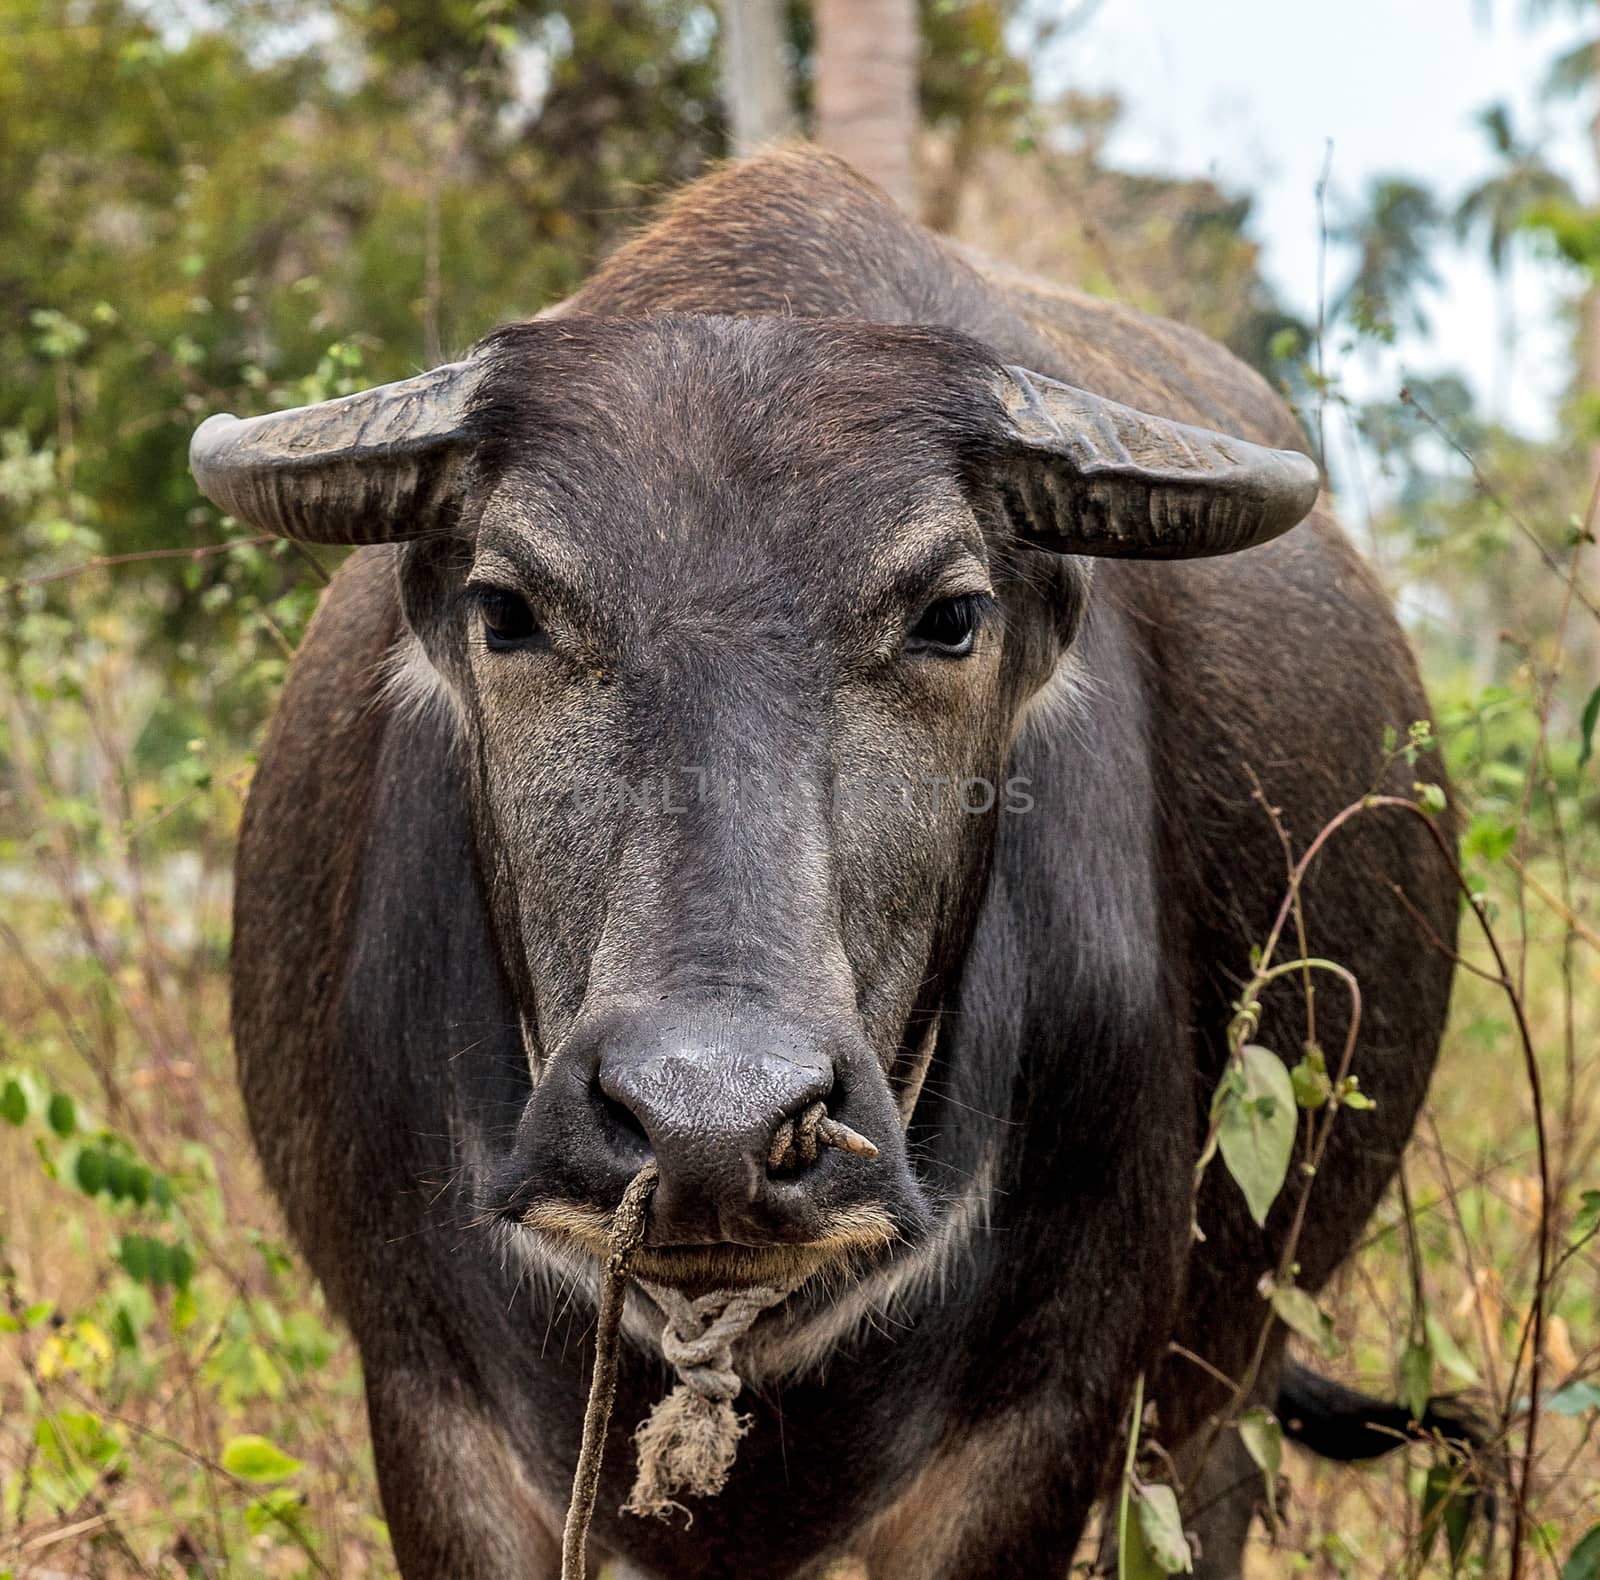 Black water buffalo or carabao by Vladyslav